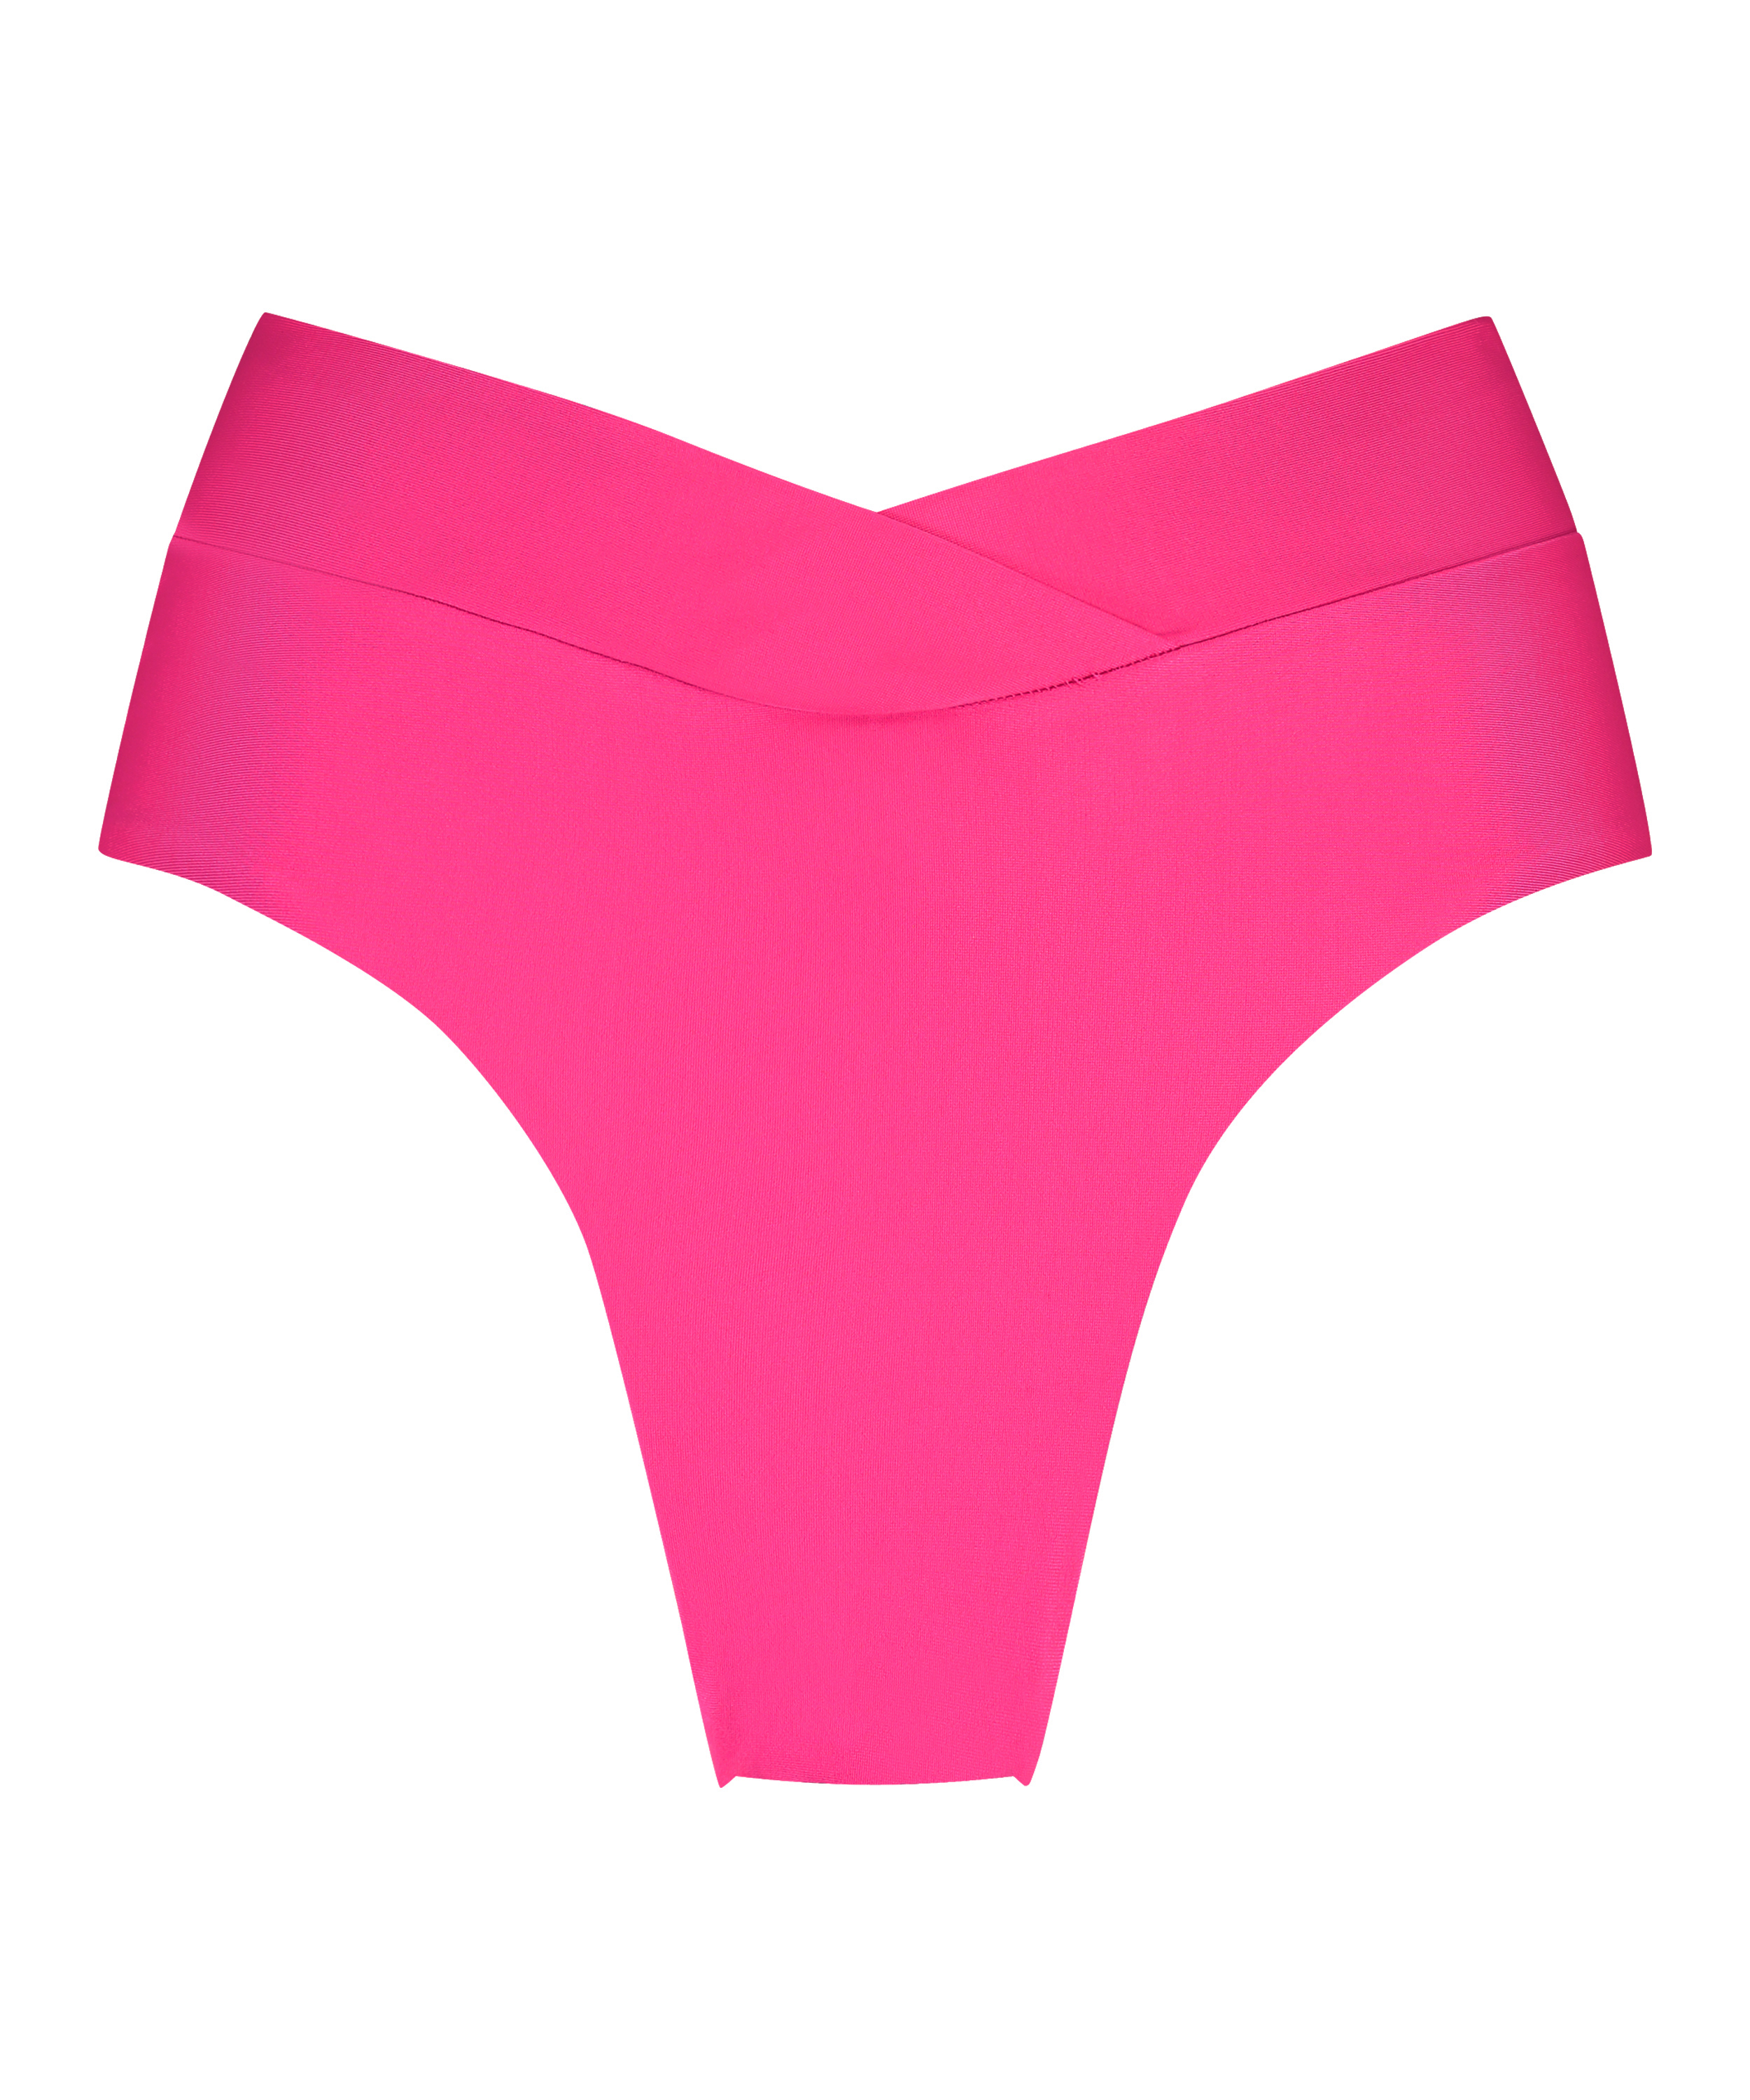 Rio Bikinitrusse Naples, pink, main